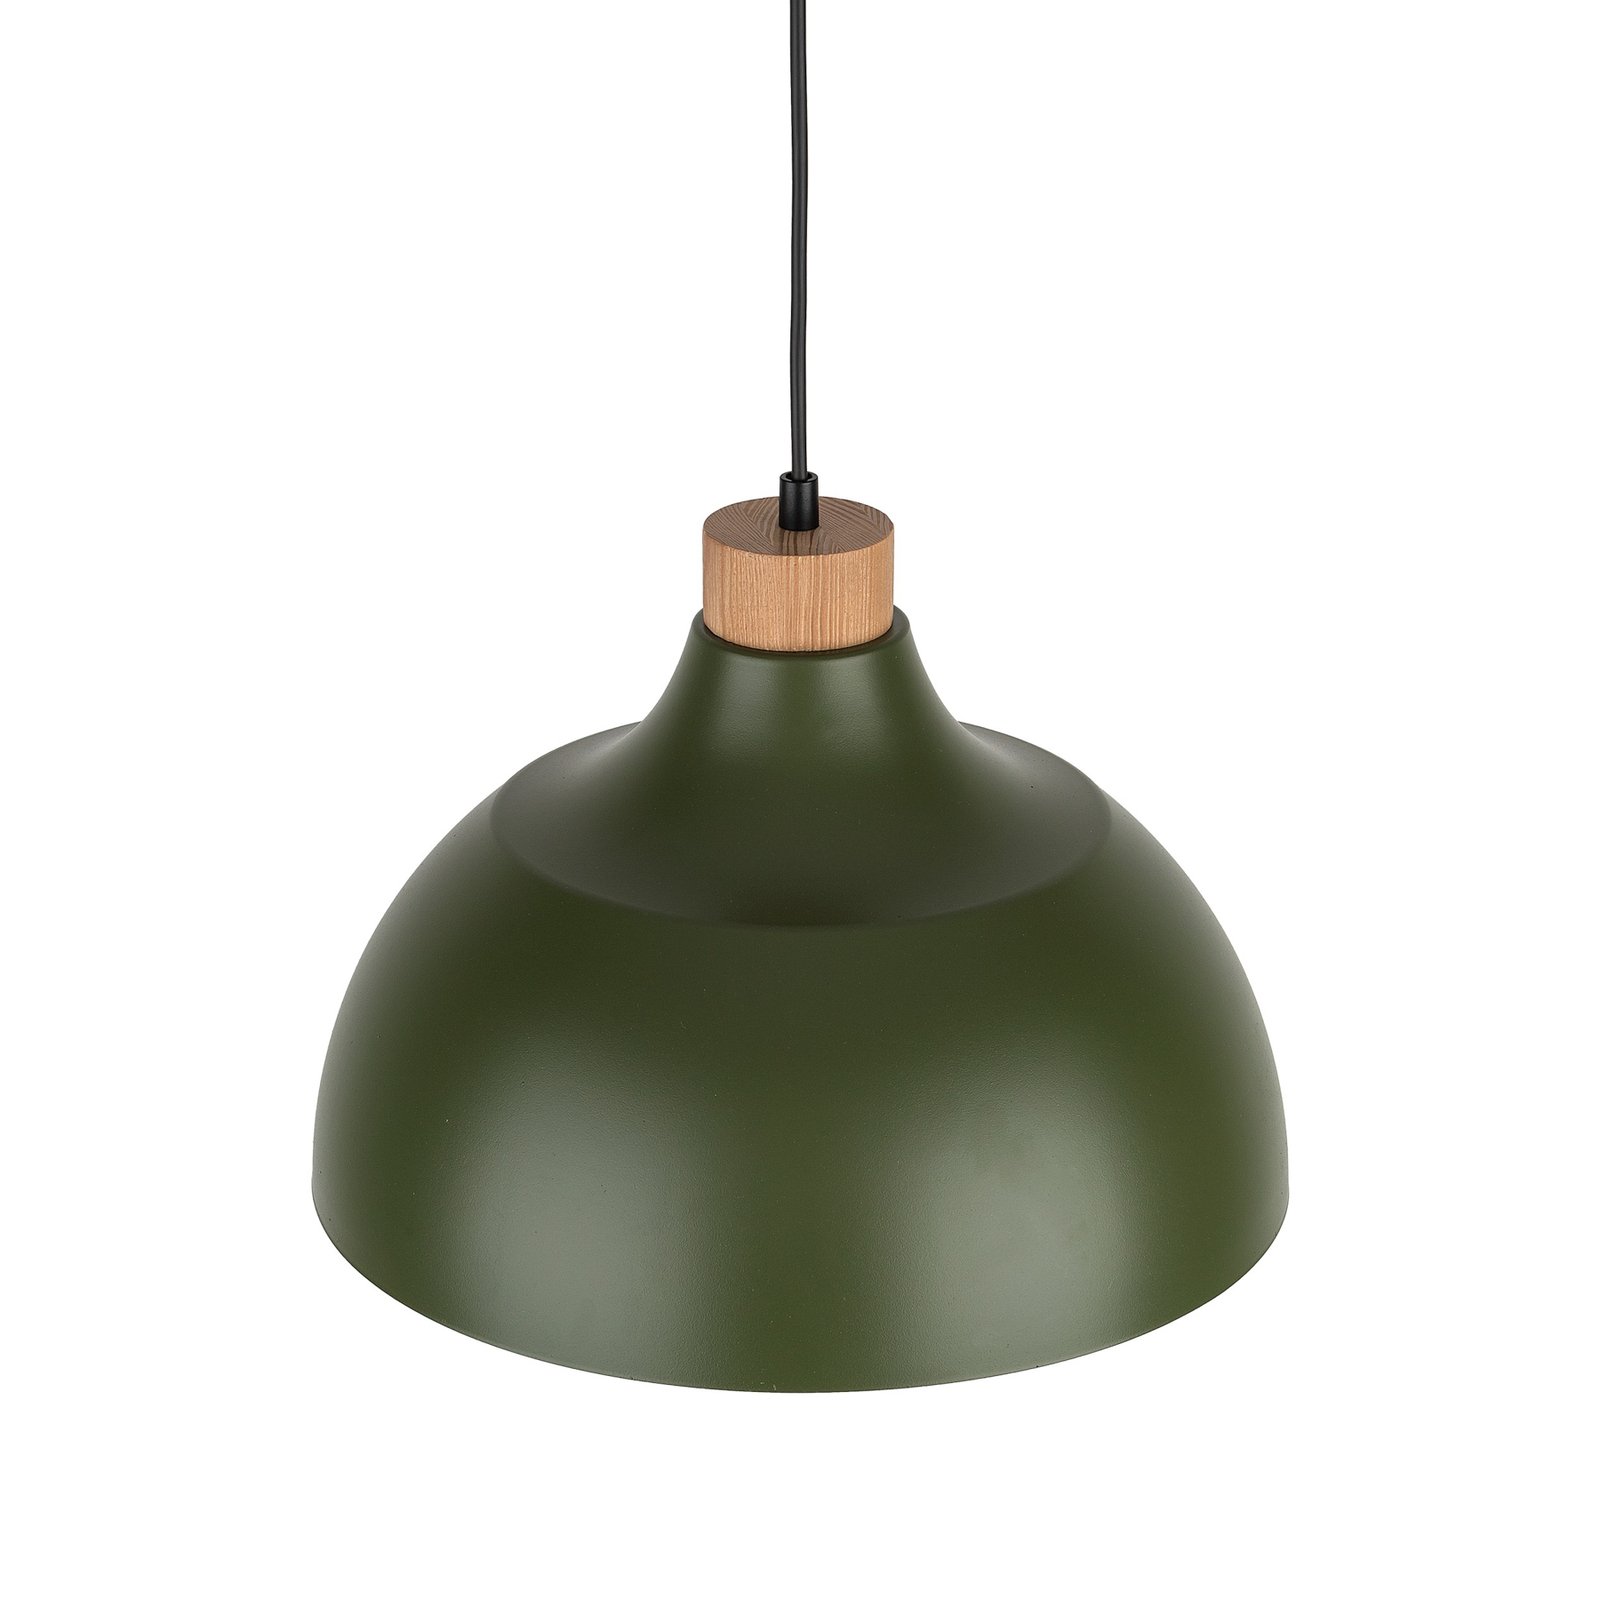 Envostar hanglamp Kaitt, houtdetail, Ø 34 cm, groen